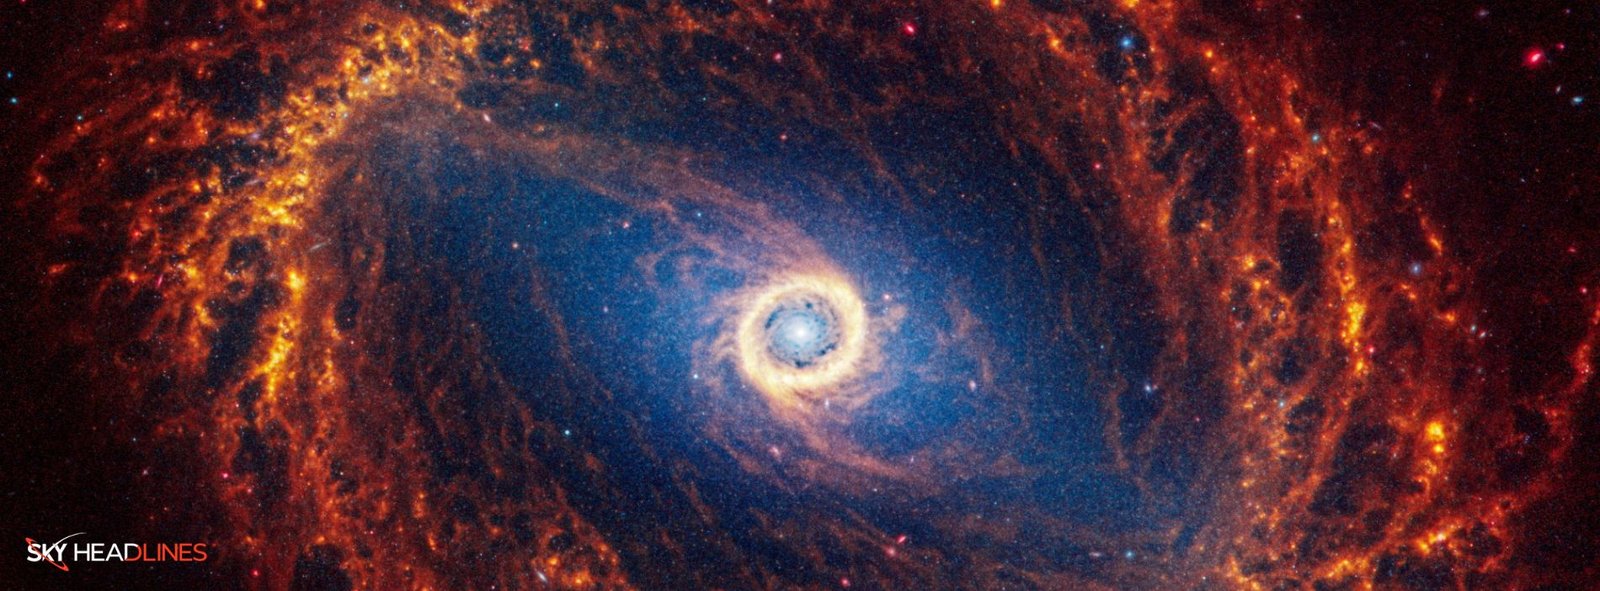 Spiral Galaxies img 3